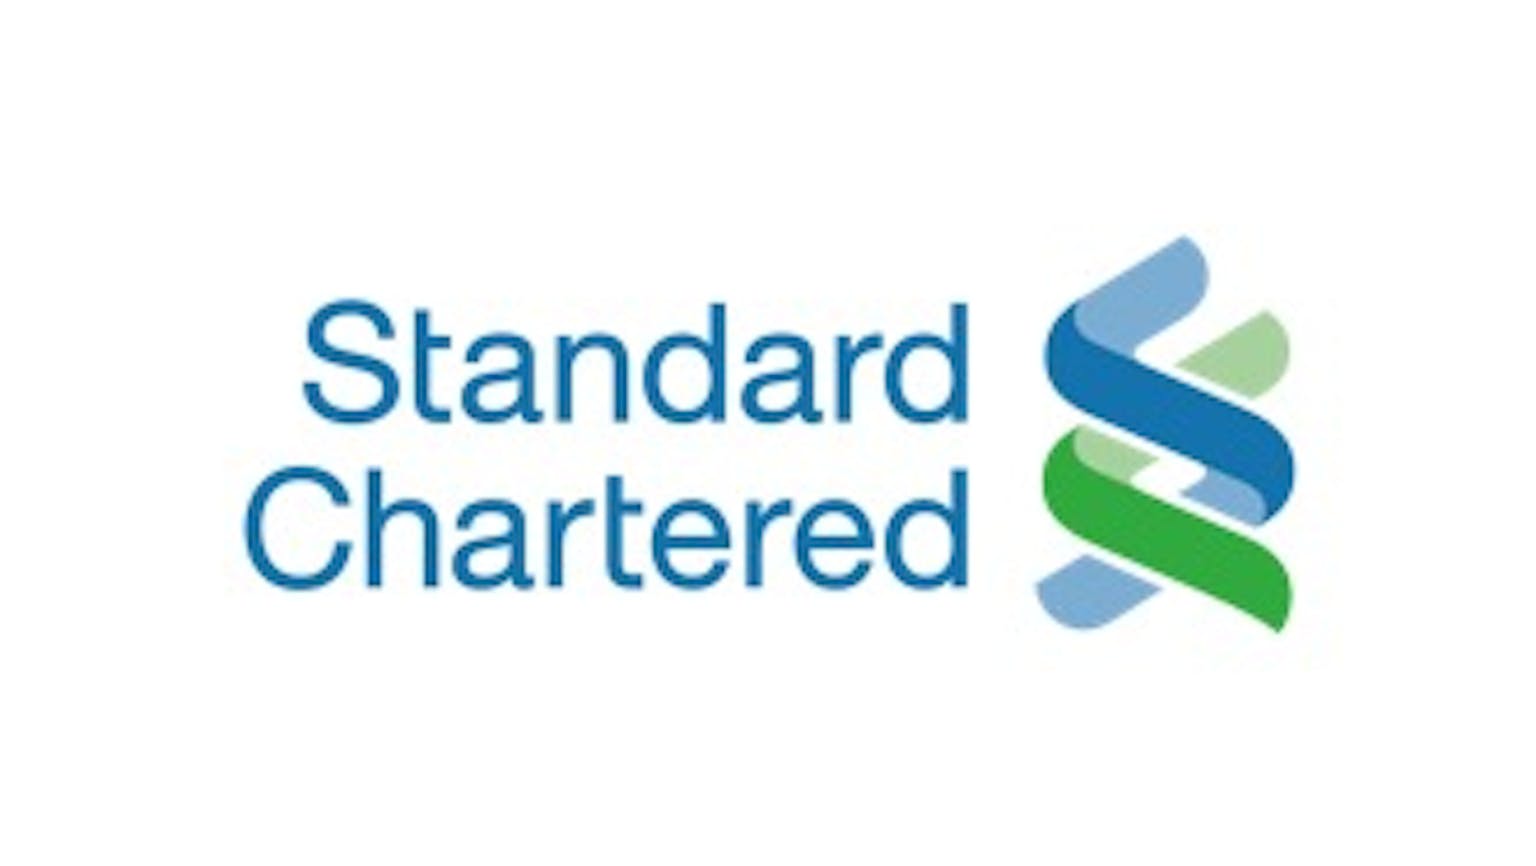 Kredit Tanpa Agunan Standard Chartered